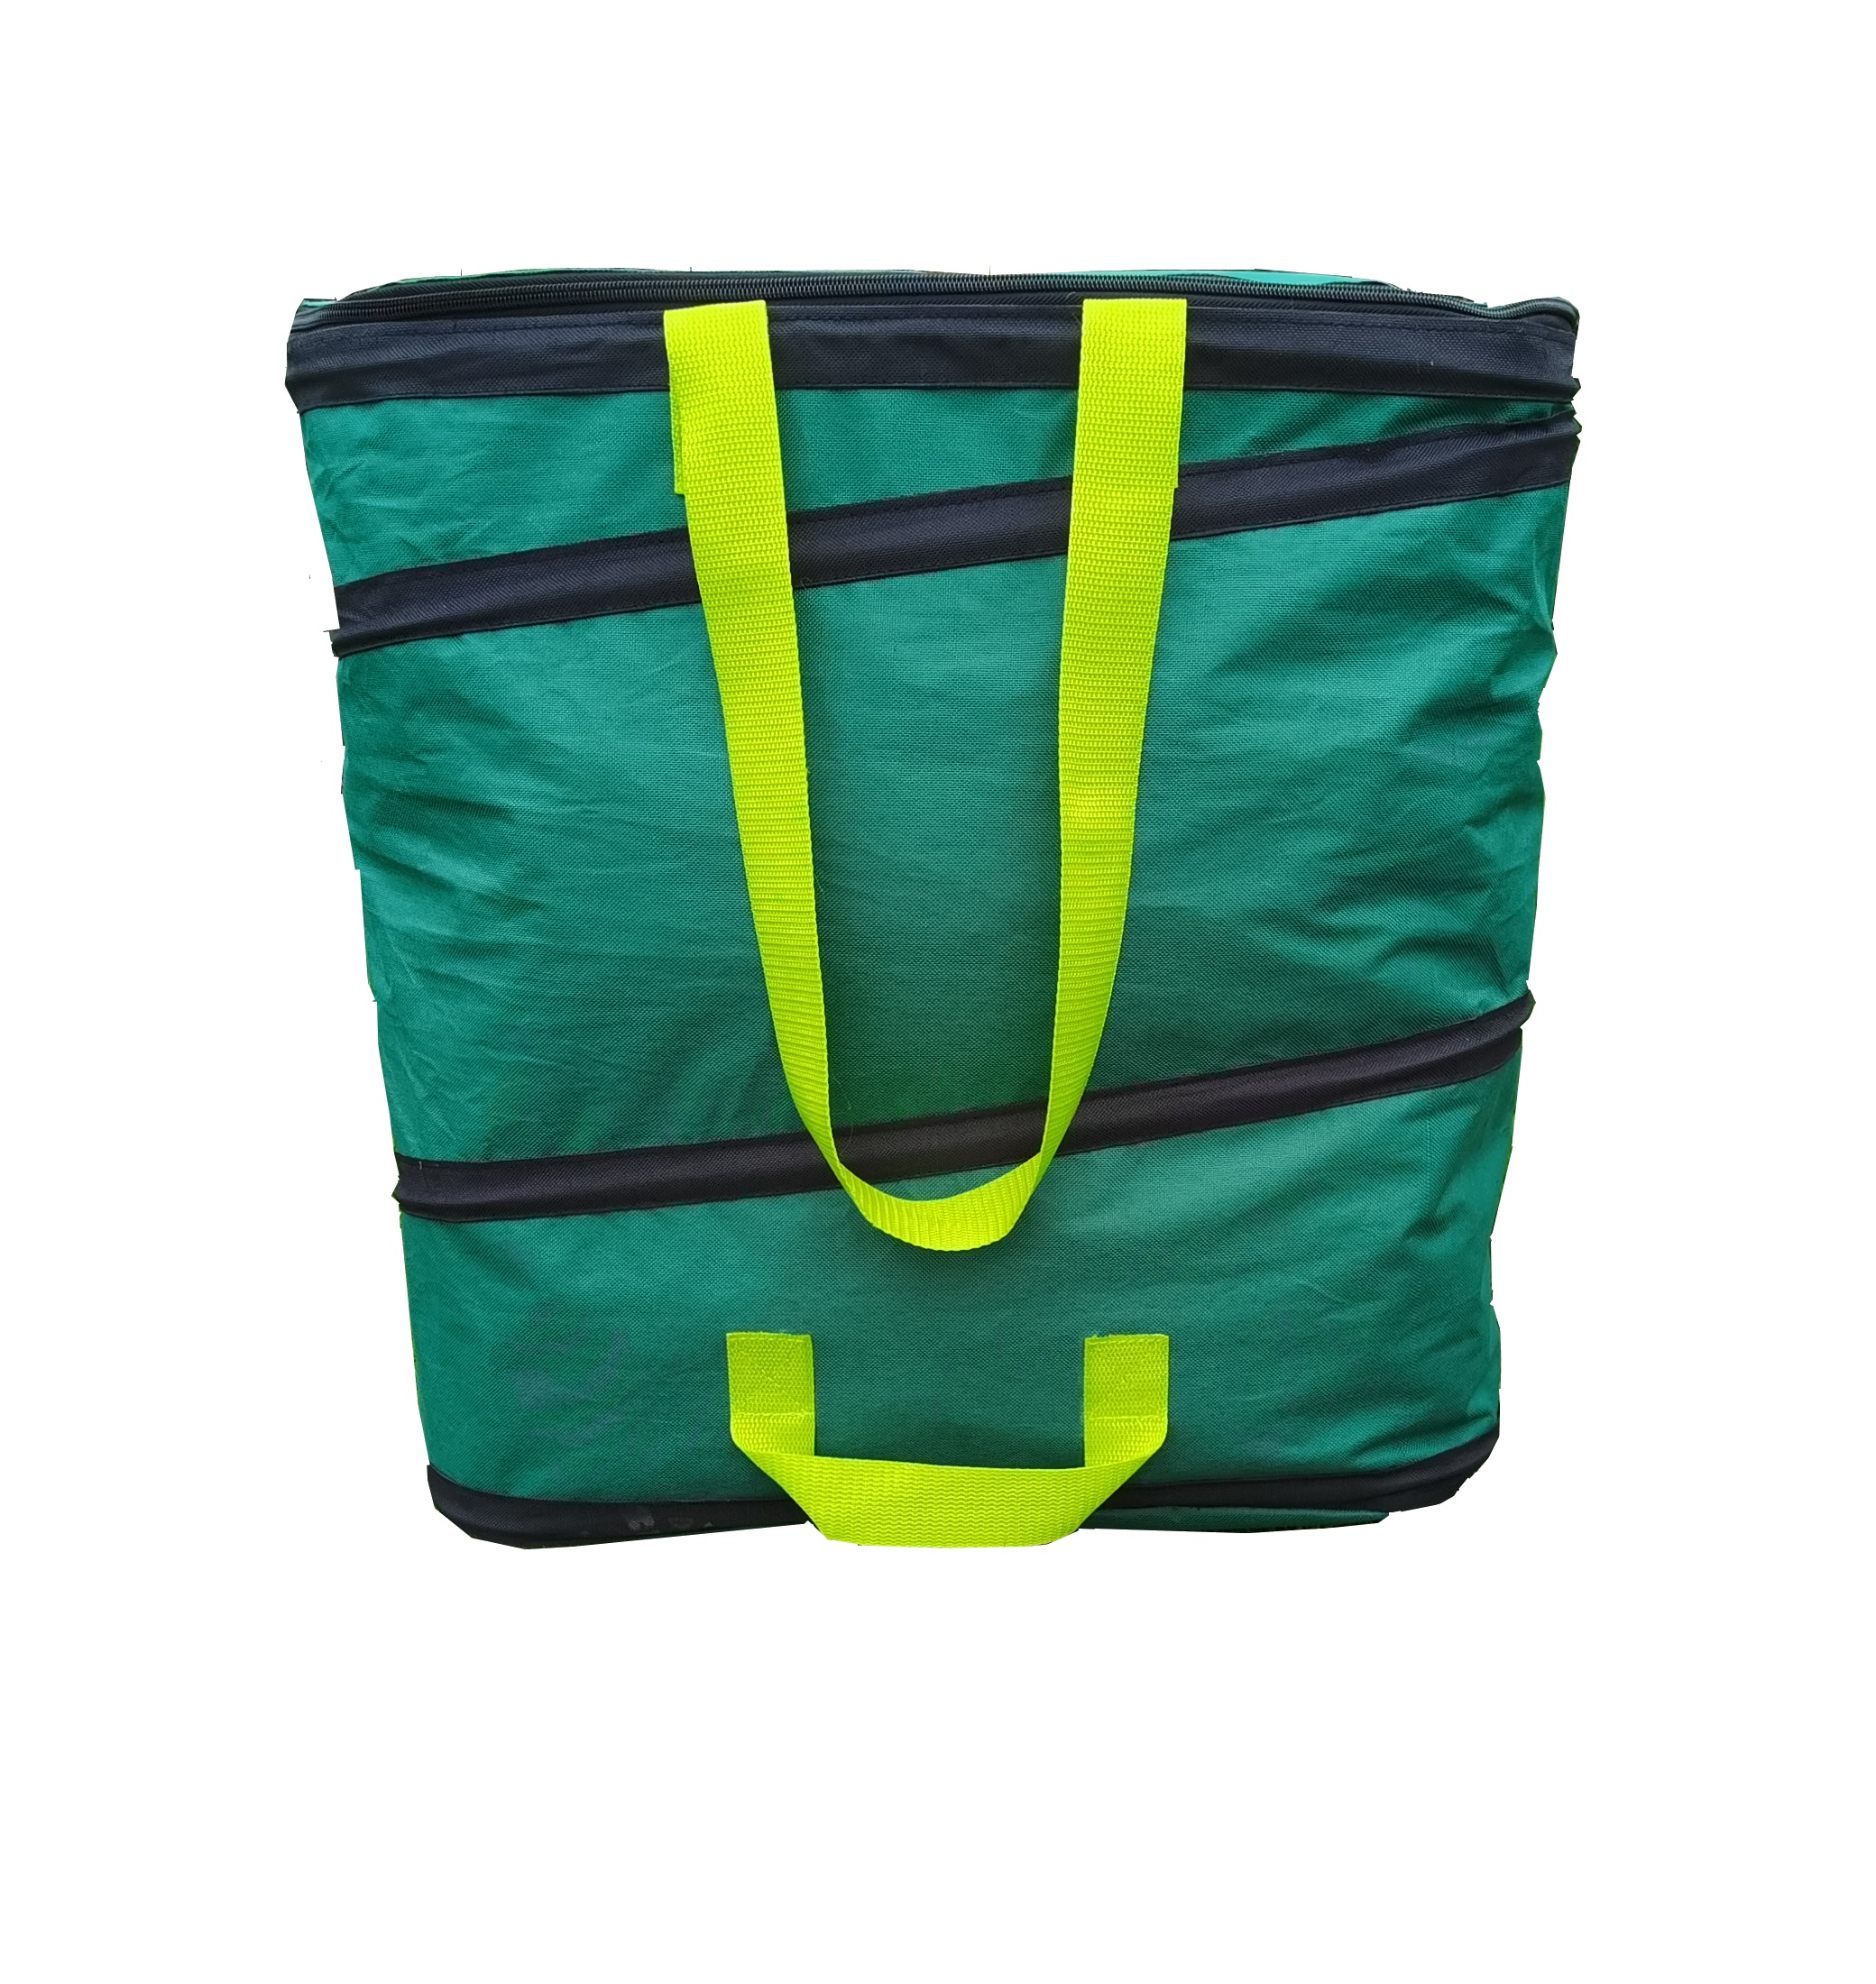 Square pop-up leaf bag POP UP SQUARE green 125 l (50x50x50cm)